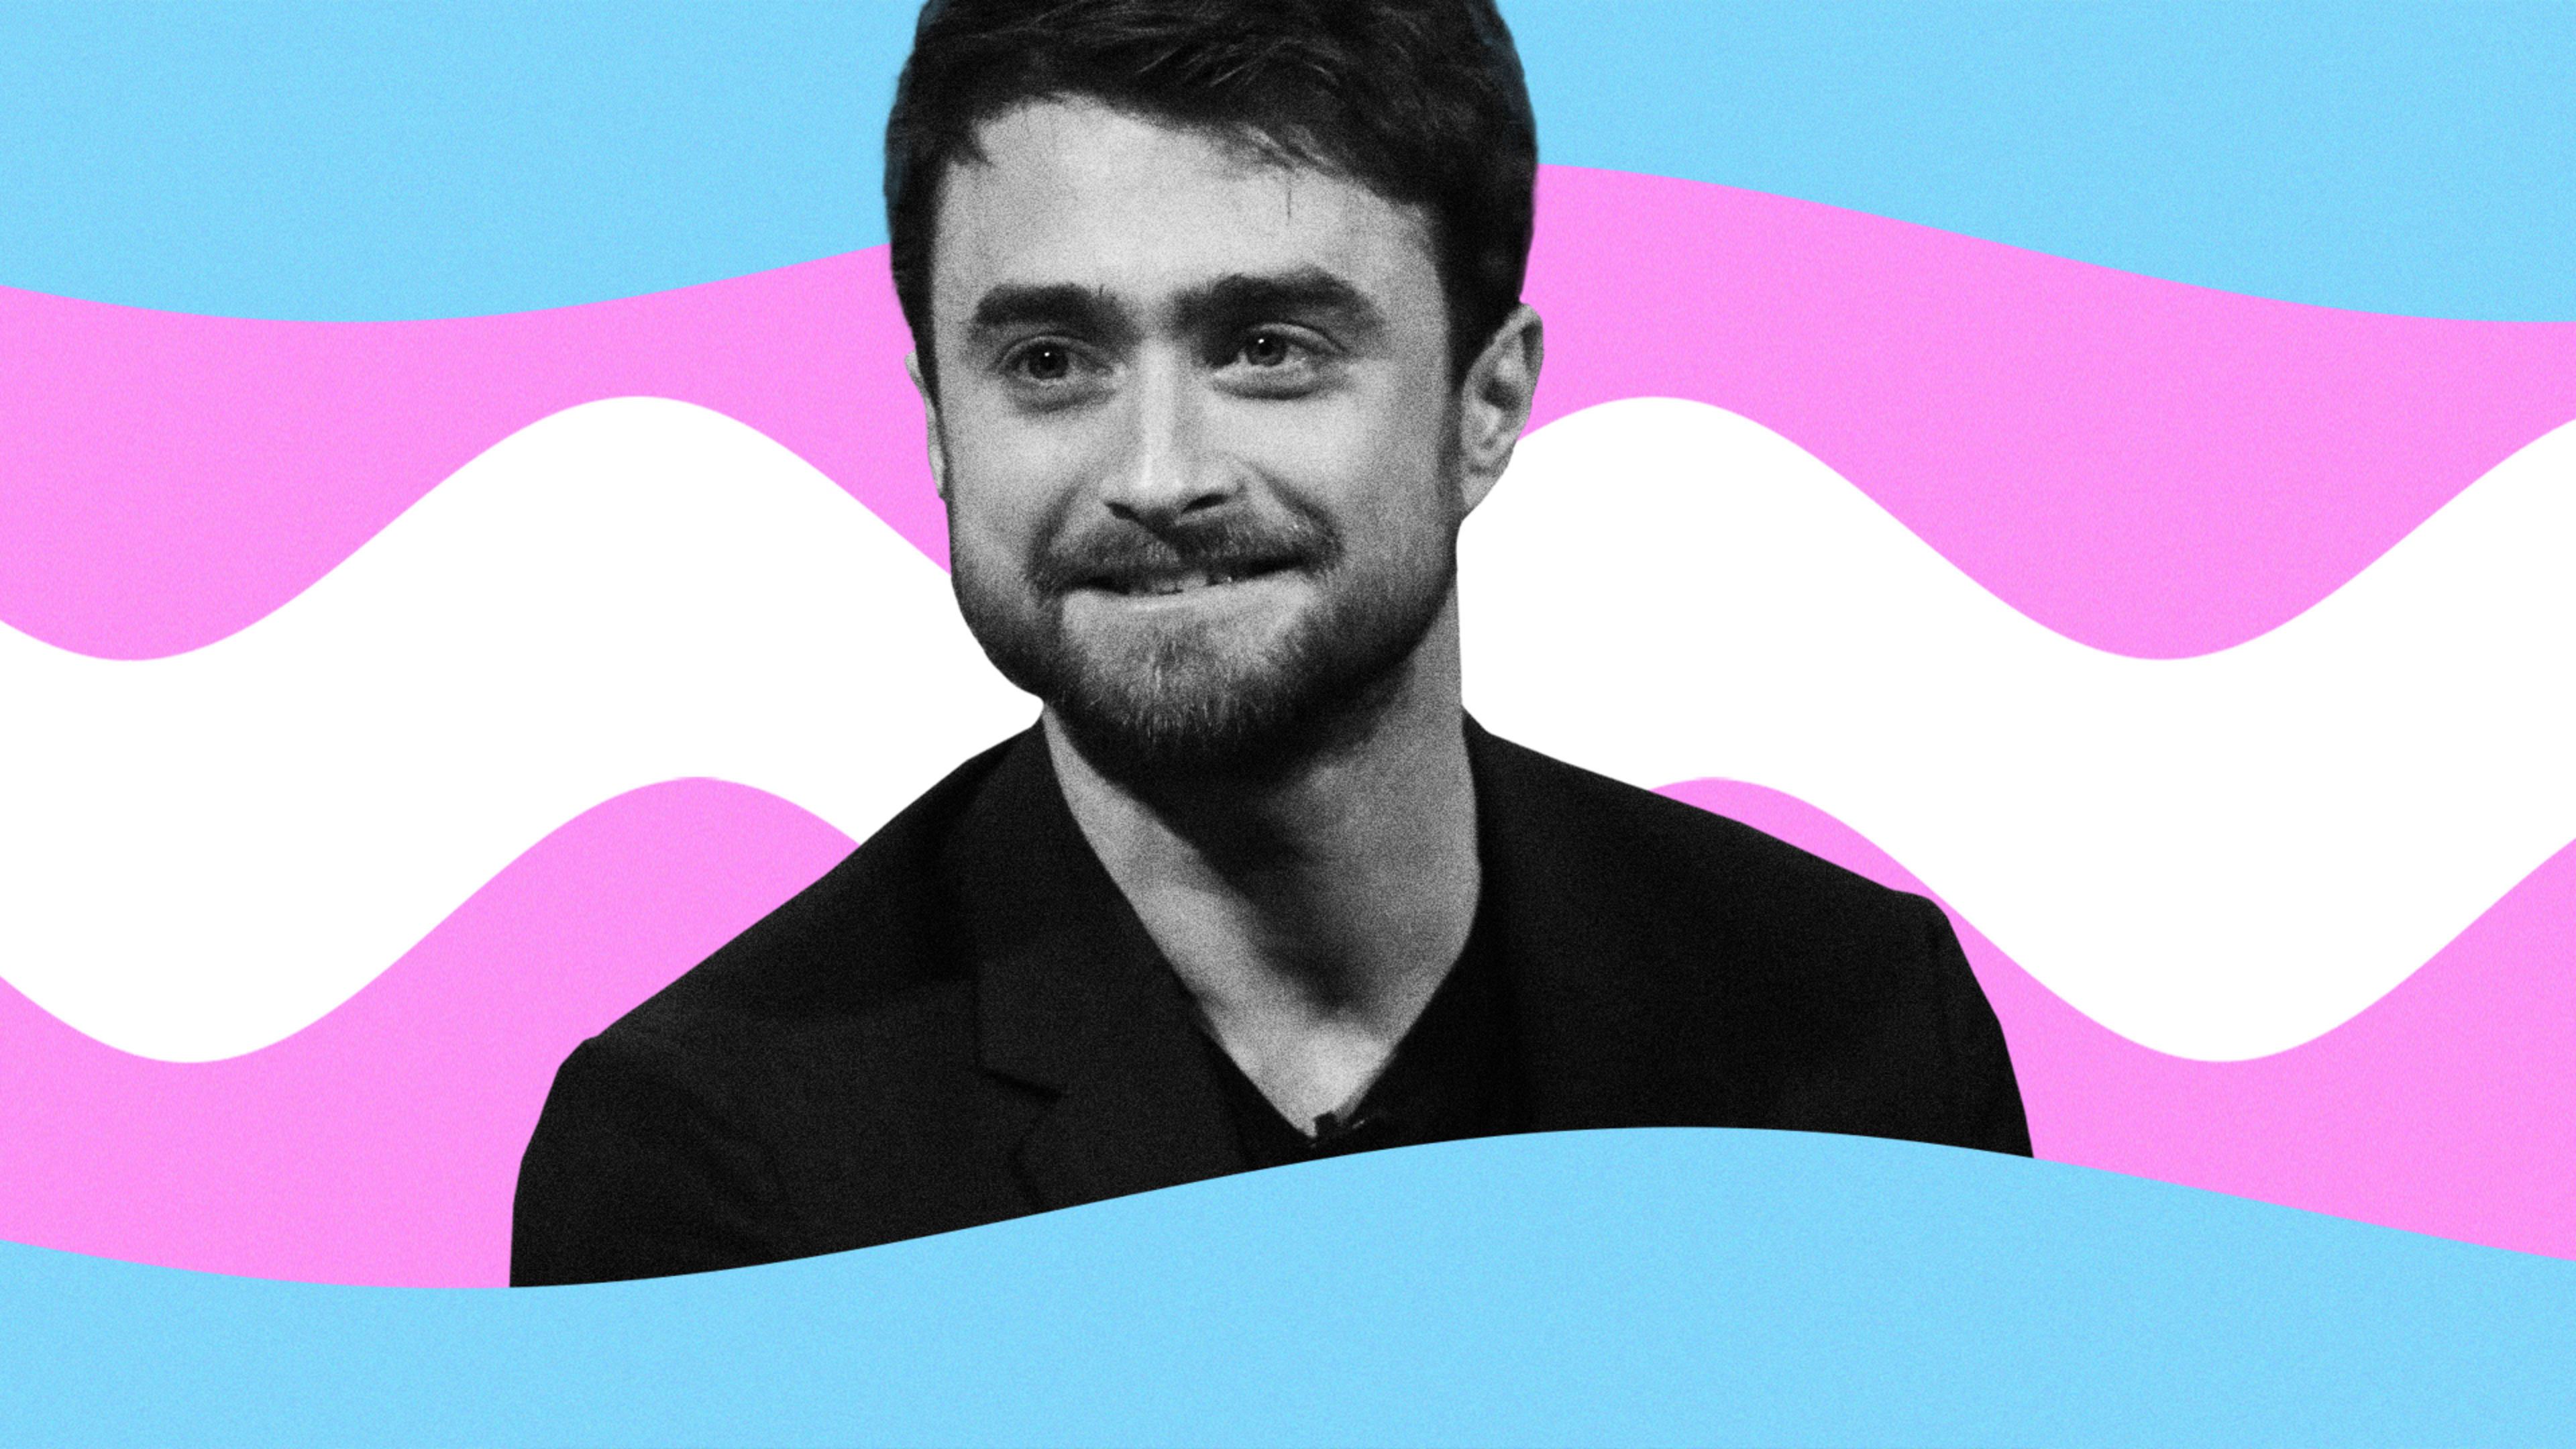 Daniel Radcliffe rebukes J.K. Rowling’s latest tweets about trans women